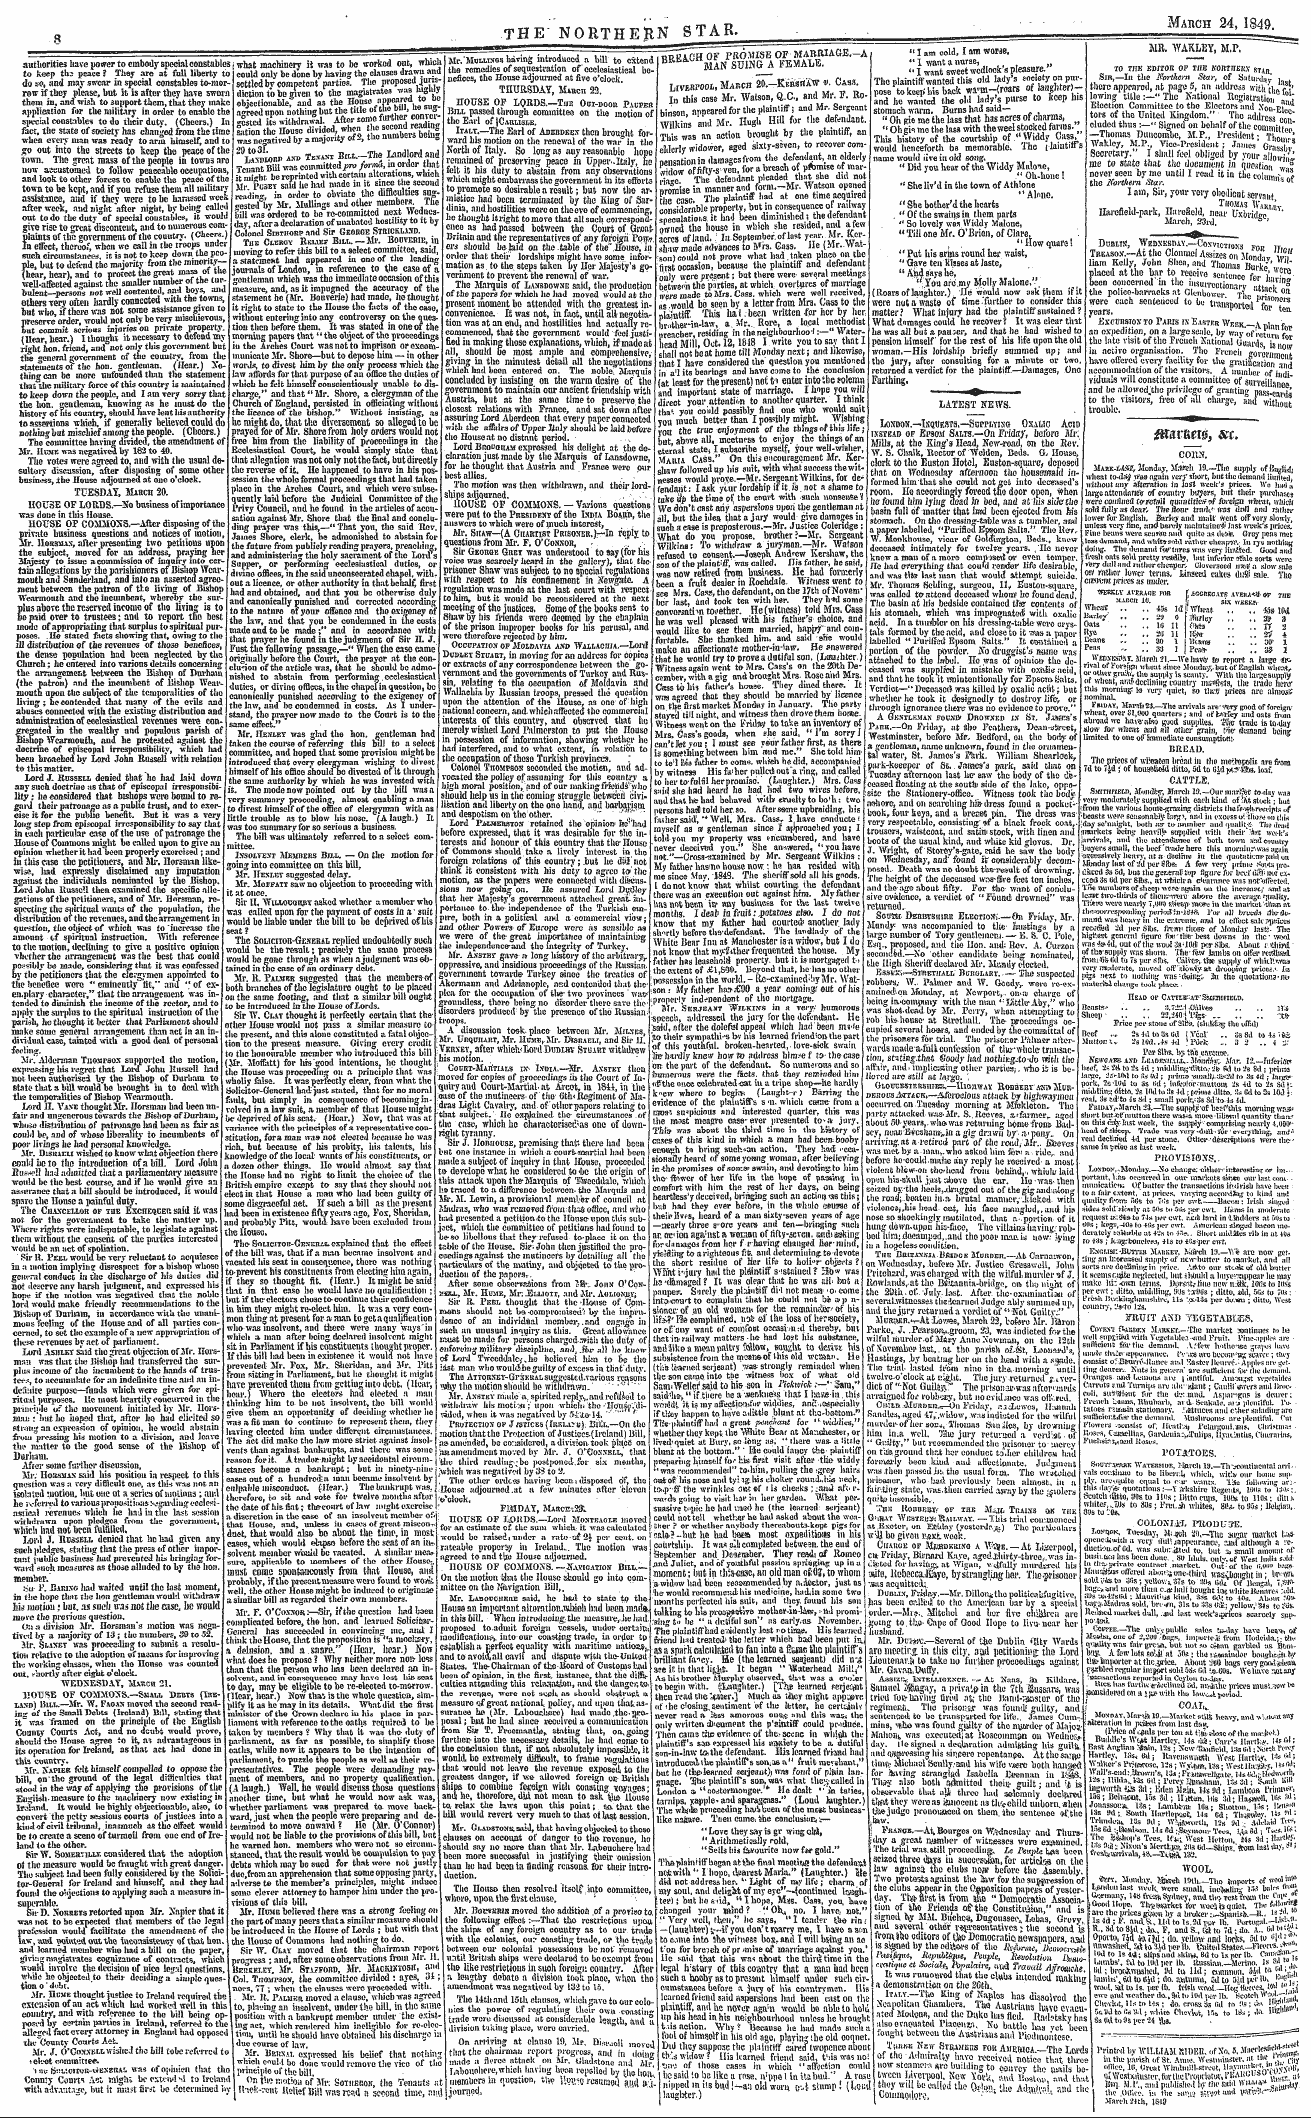 Northern Star (1837-1852): jS F Y, 3rd edition - Latest News. London.—Isqubsta.—Surplyino...